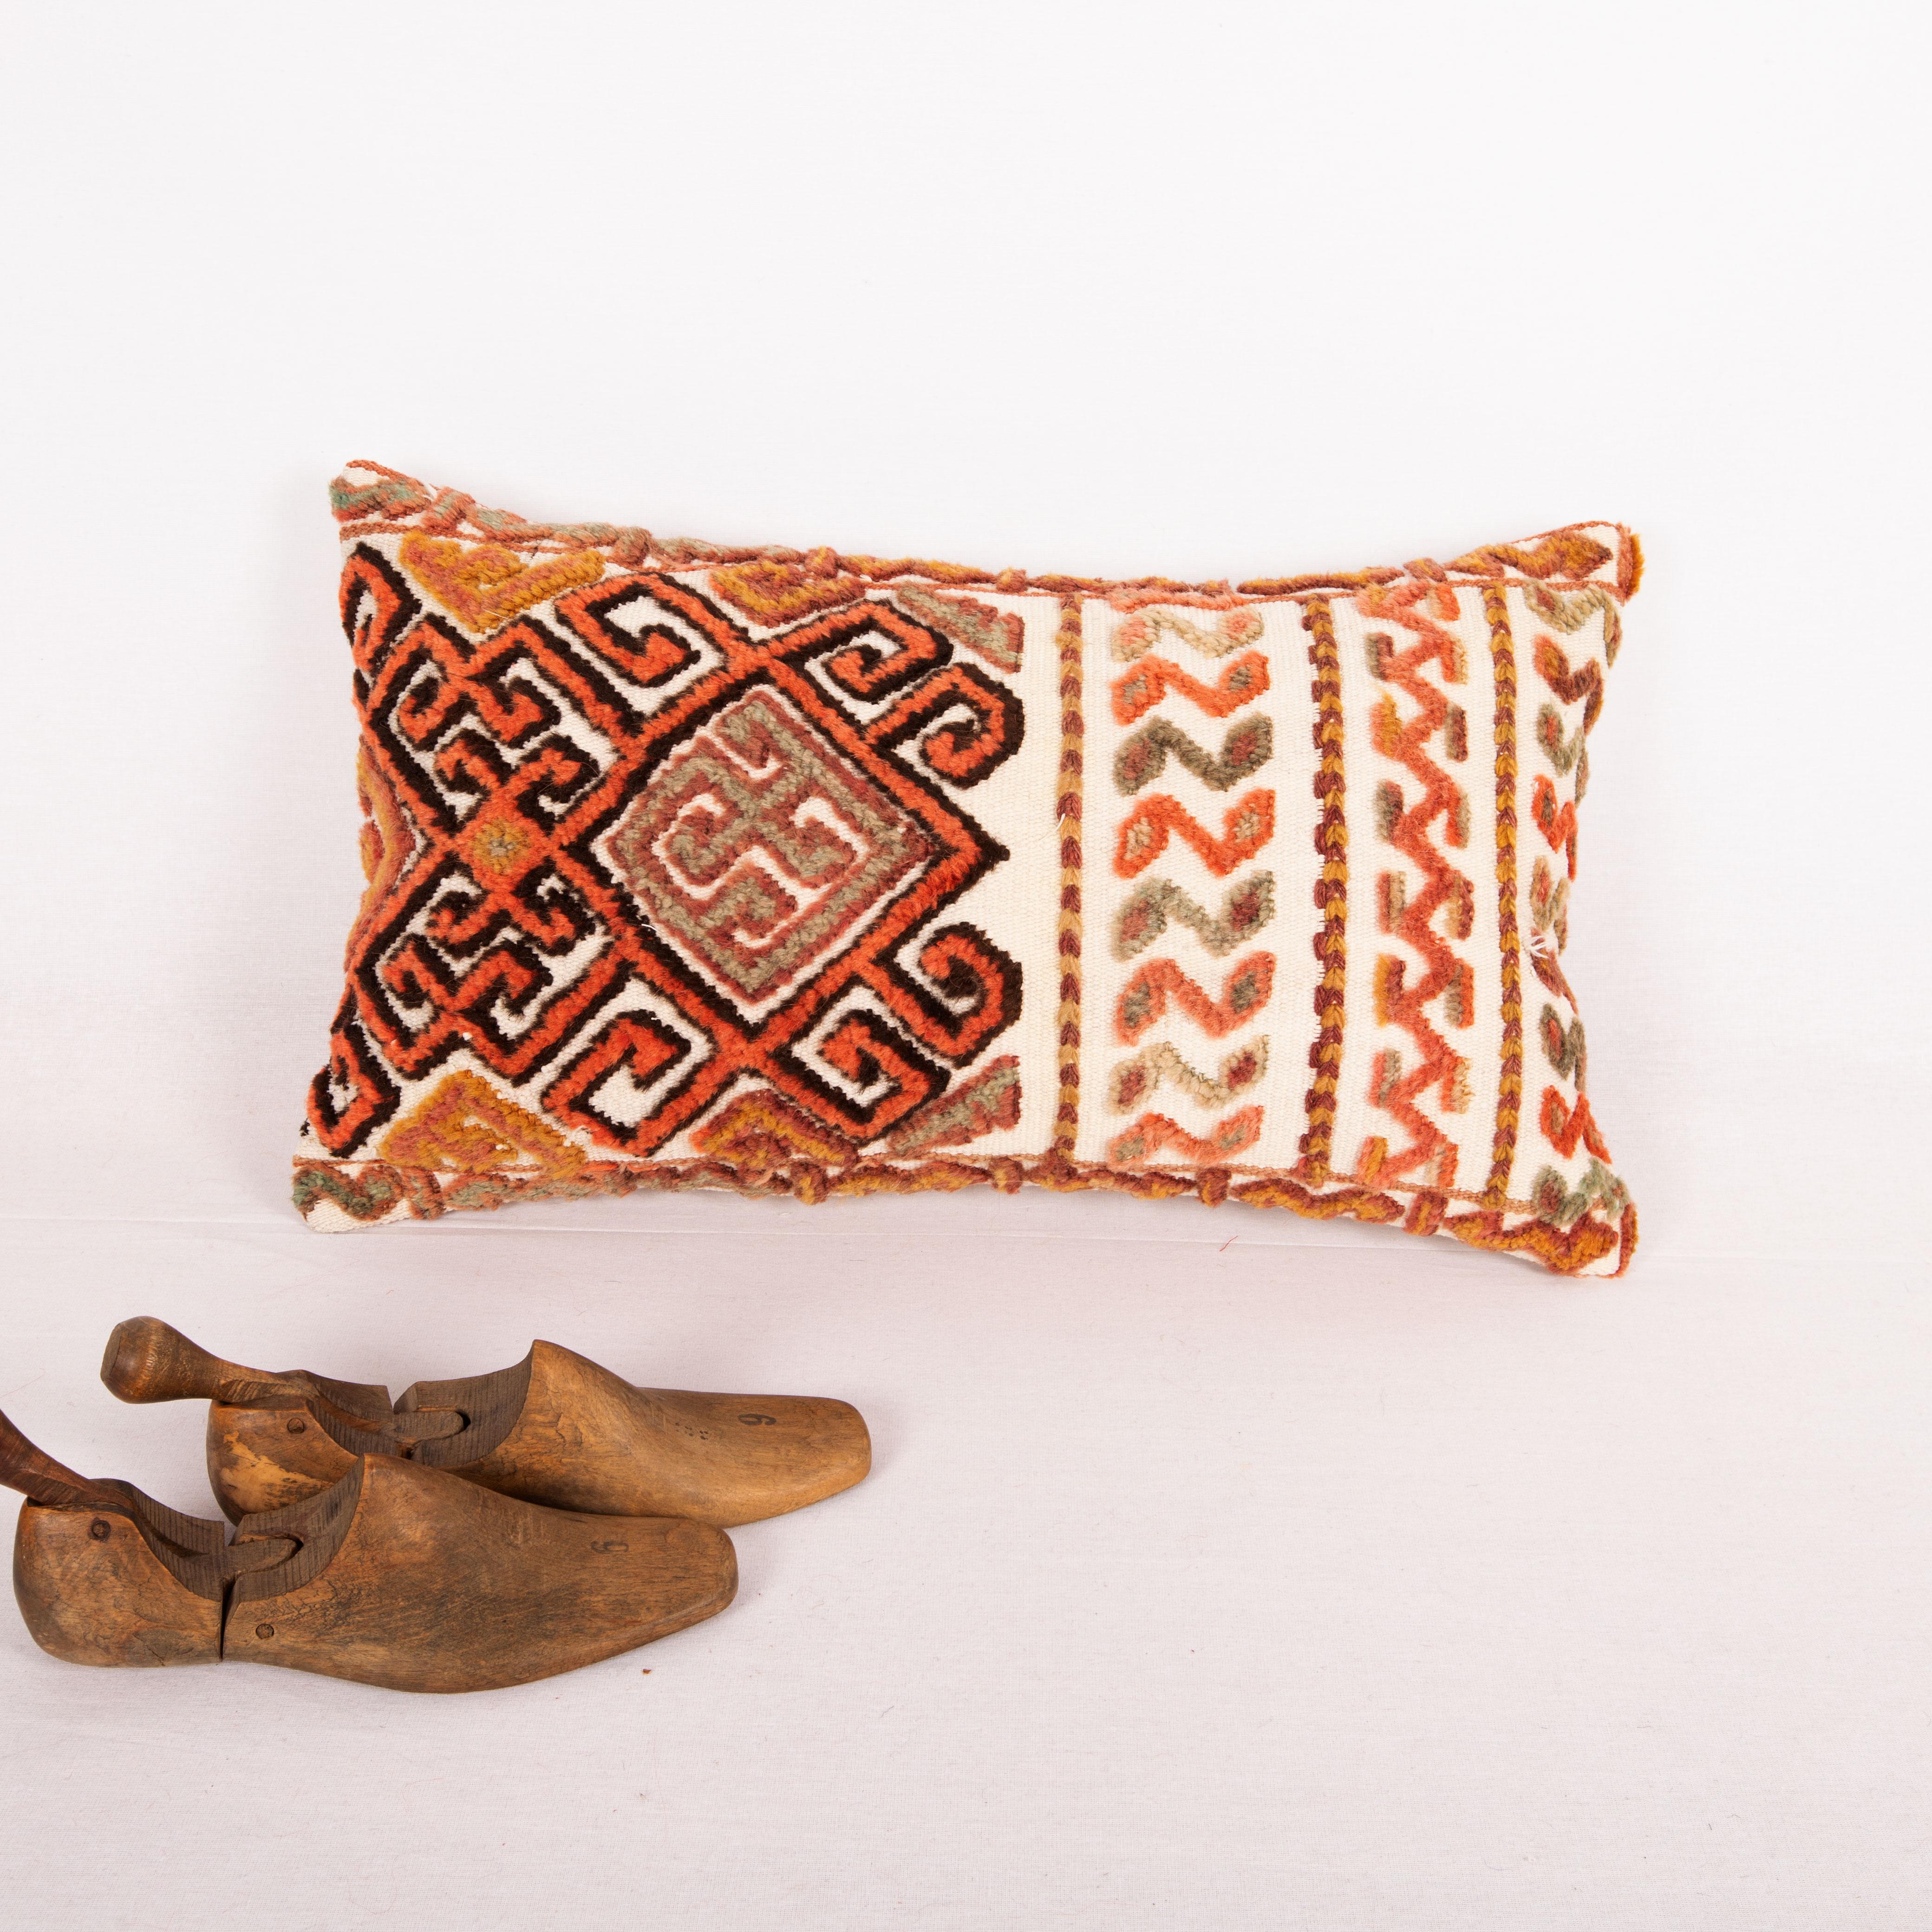 Hand-Woven Pillow Cover Made from an Early 20th C. Karakalpak Tent Band, Uzbekistan For Sale